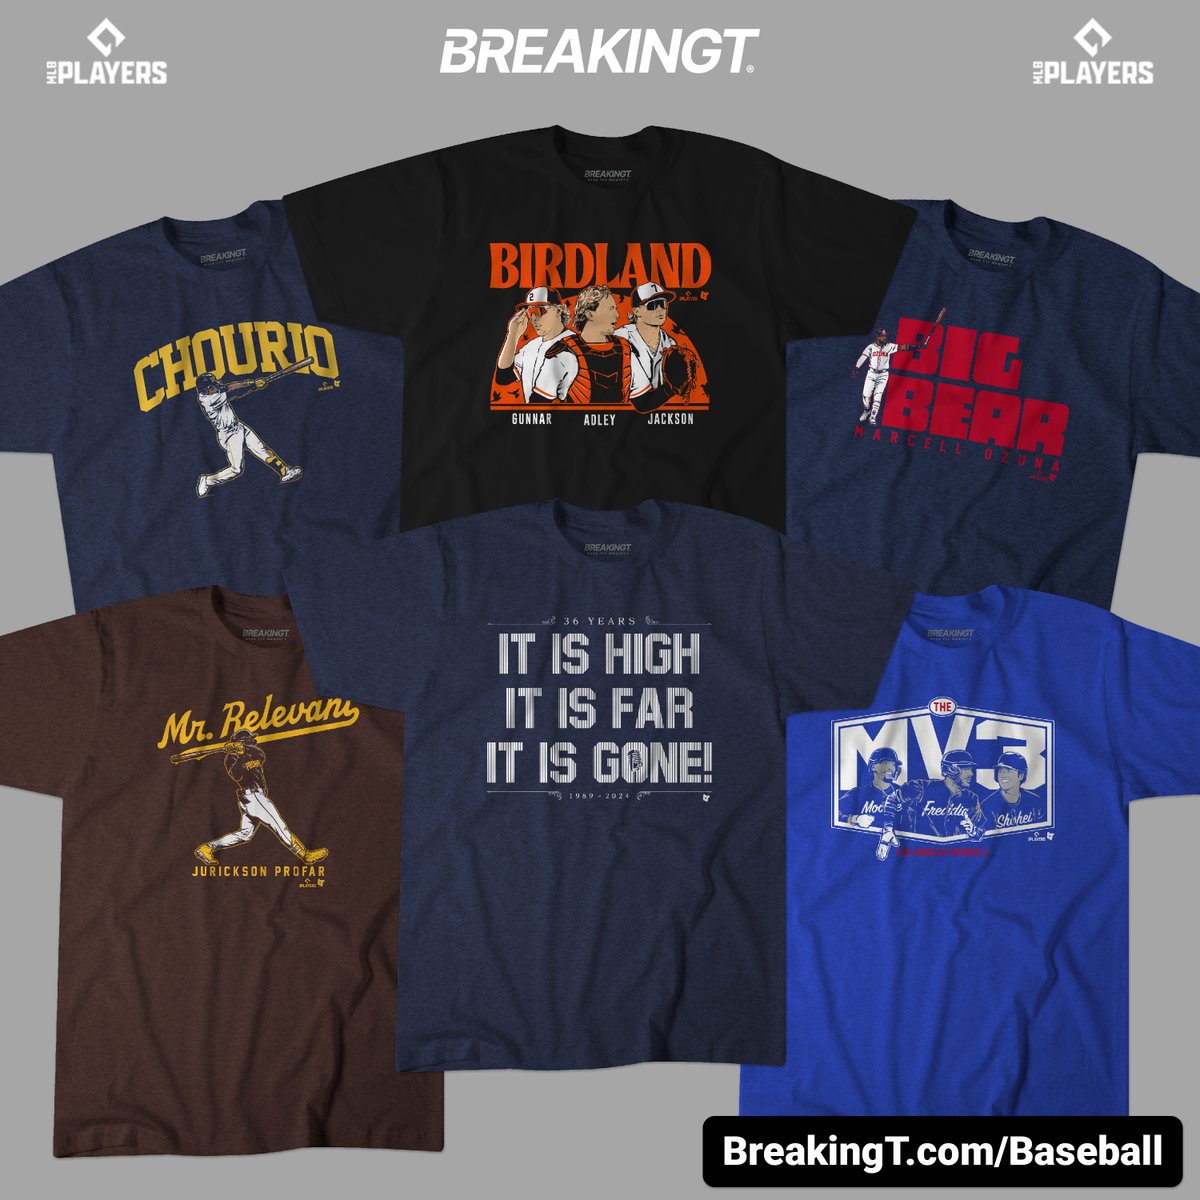 Our top-selling baseball shirts of 2024? 1️⃣...Mr. Relevant! @JURICKSONPROFAR 2️⃣ Birdland ft. Gunnar, Adley & Jackson! Shop the rest @ BreakingT.com/Baseball